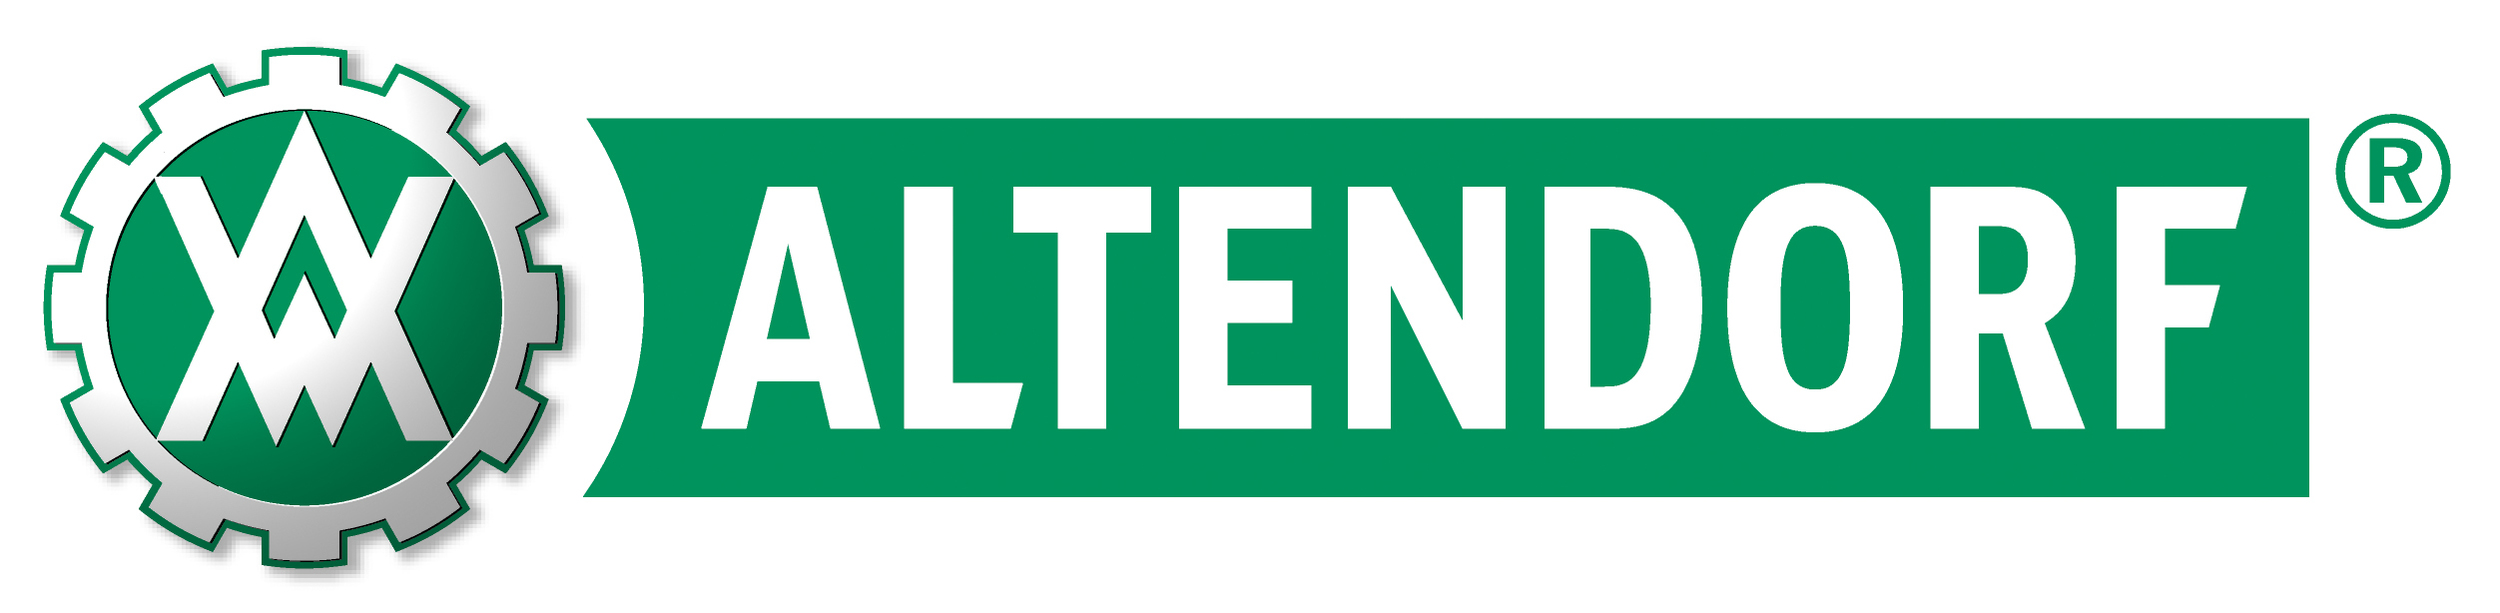 altendorf-logo.jpg